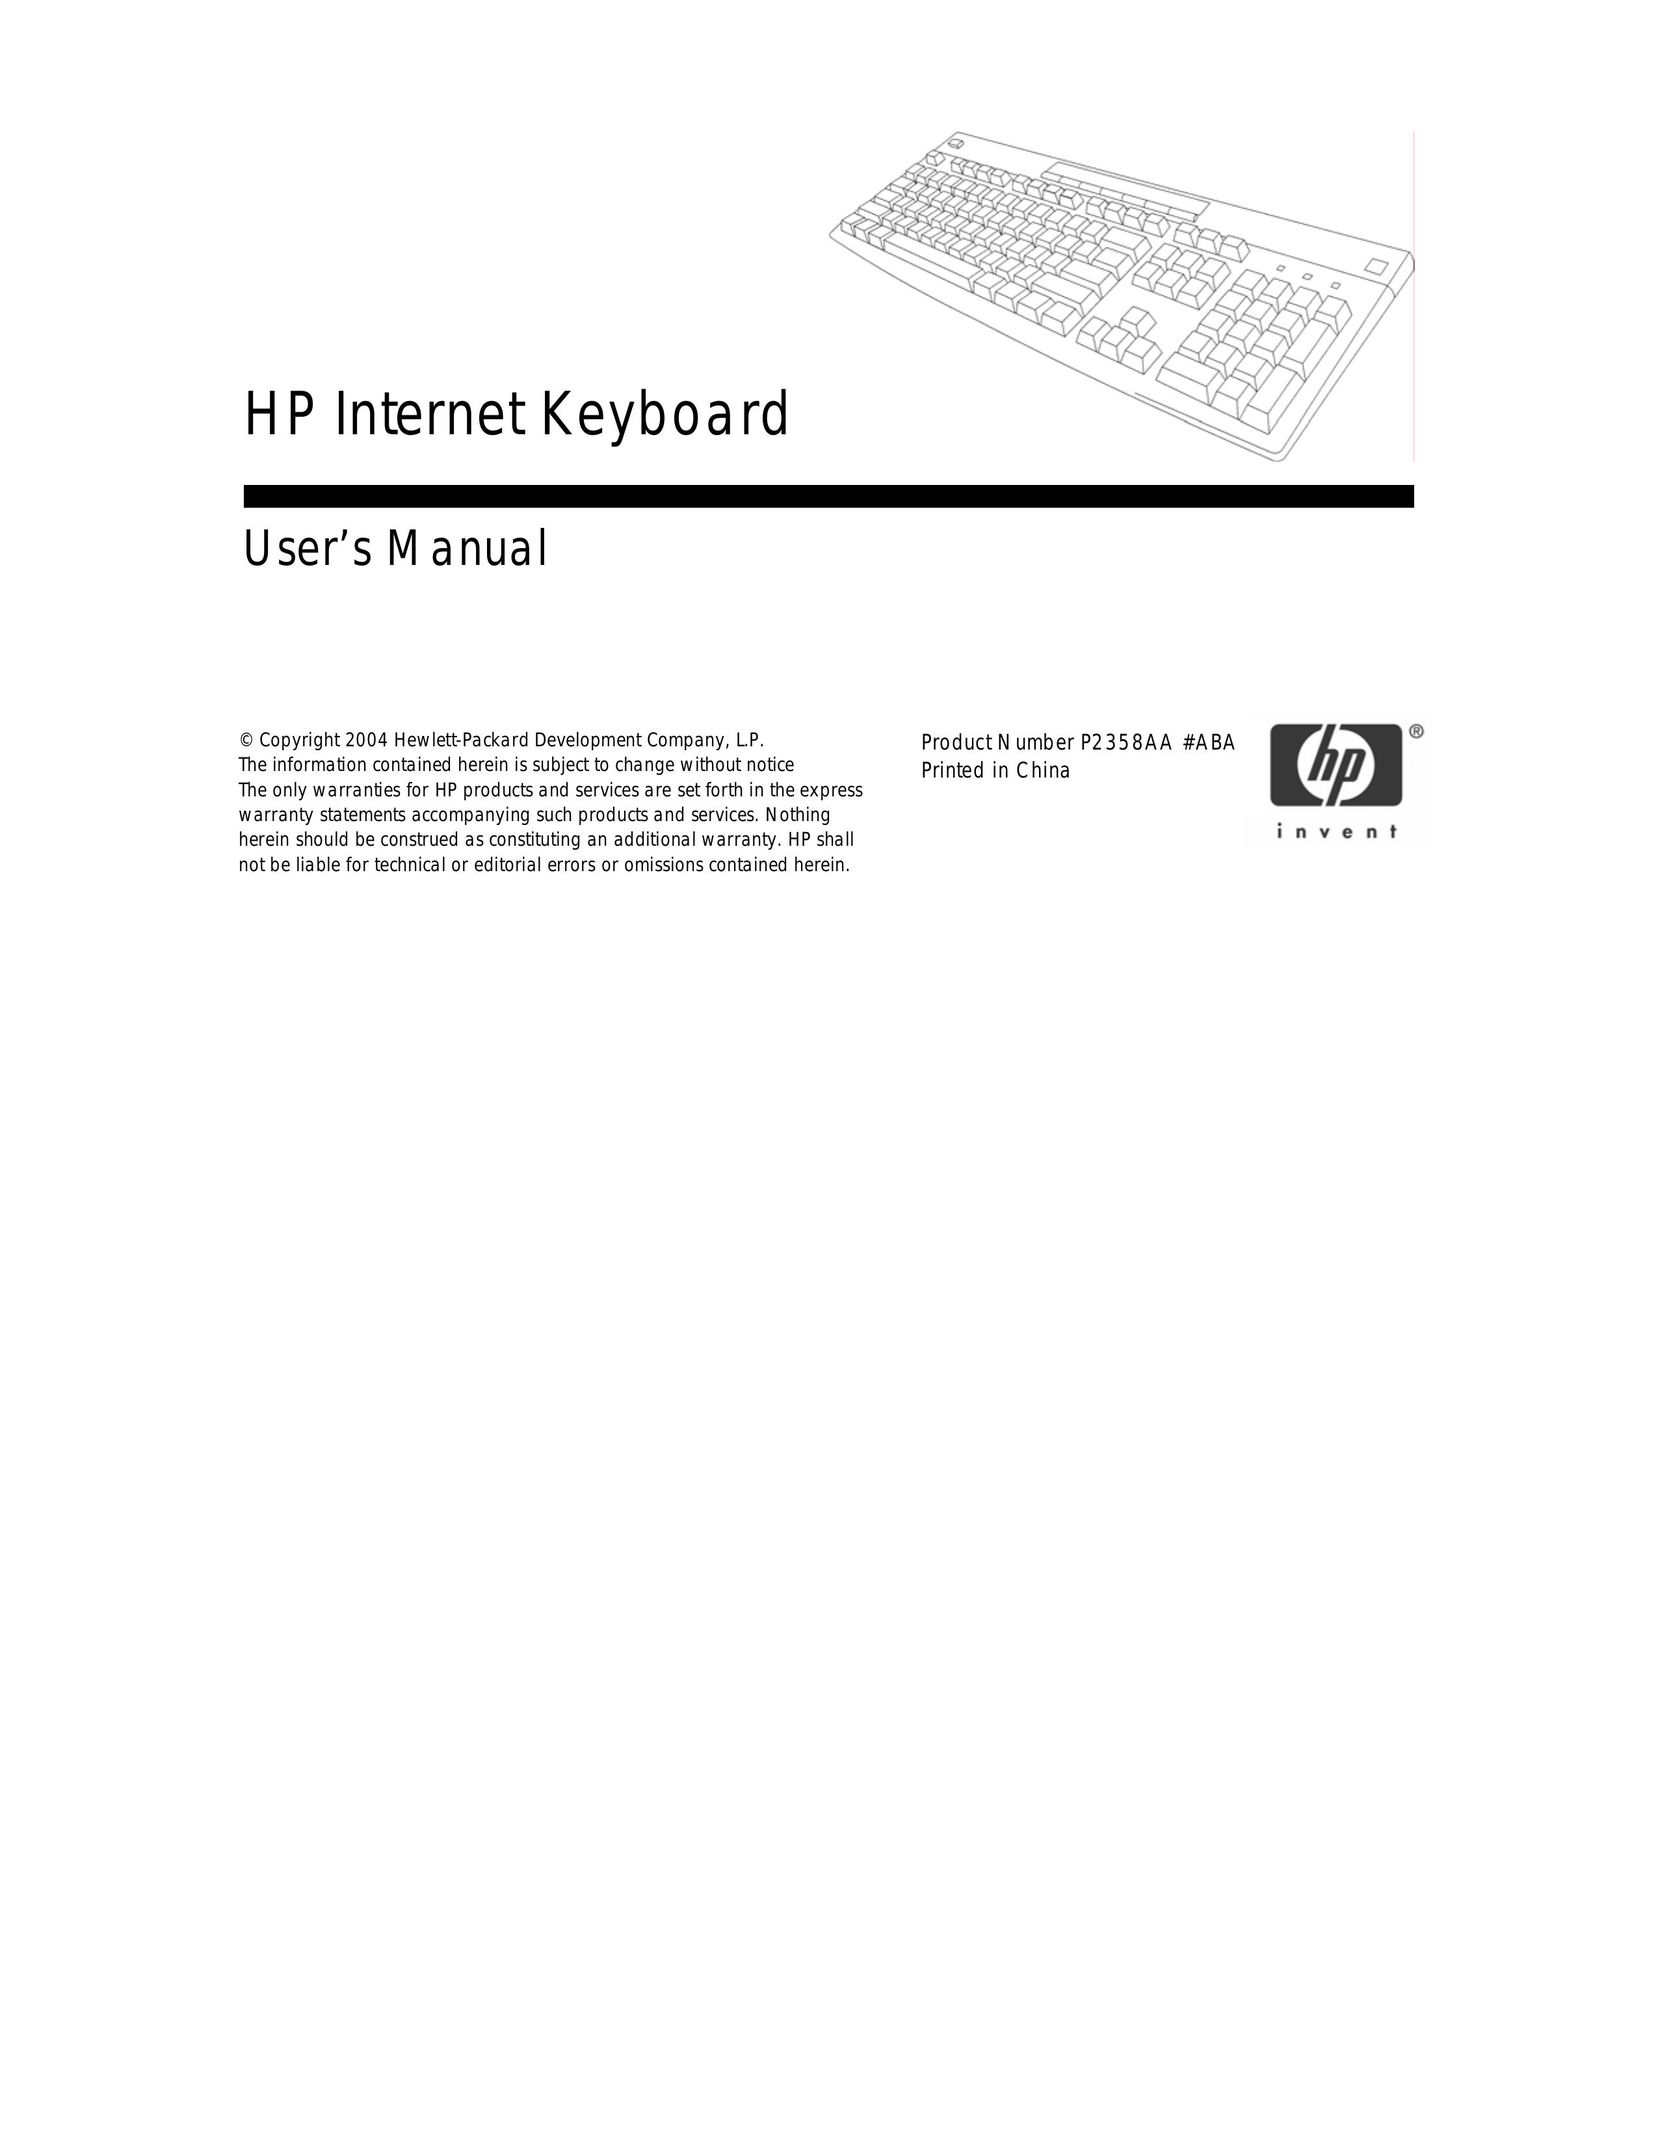 HP (Hewlett-Packard) P2358AA Computer Keyboard User Manual